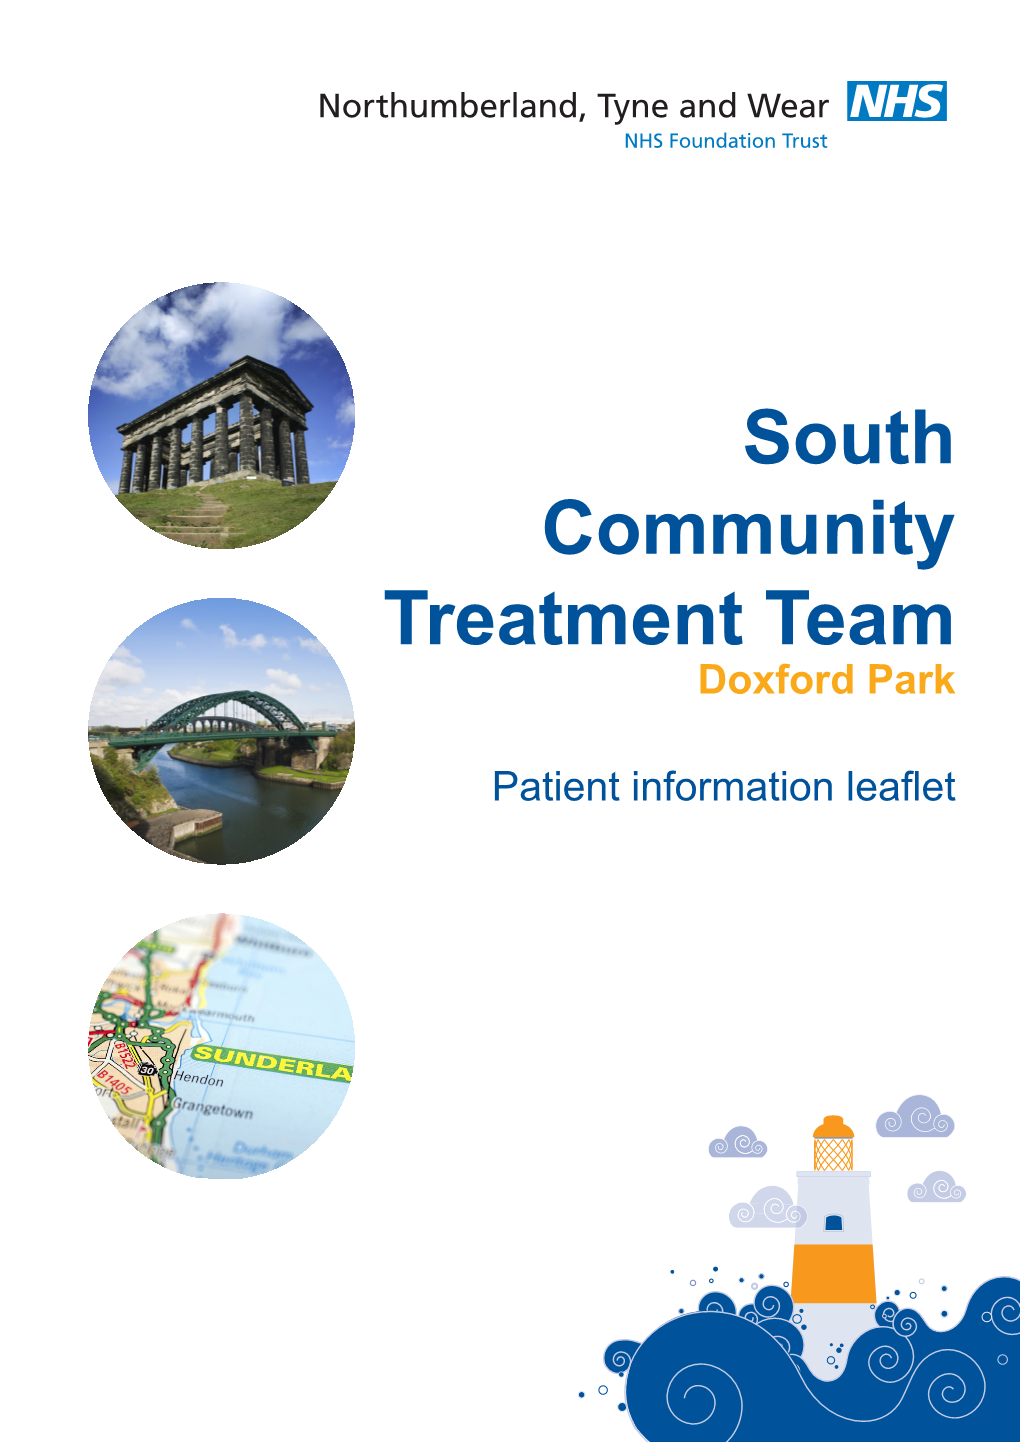 South Community Treatment Team Doxford Park